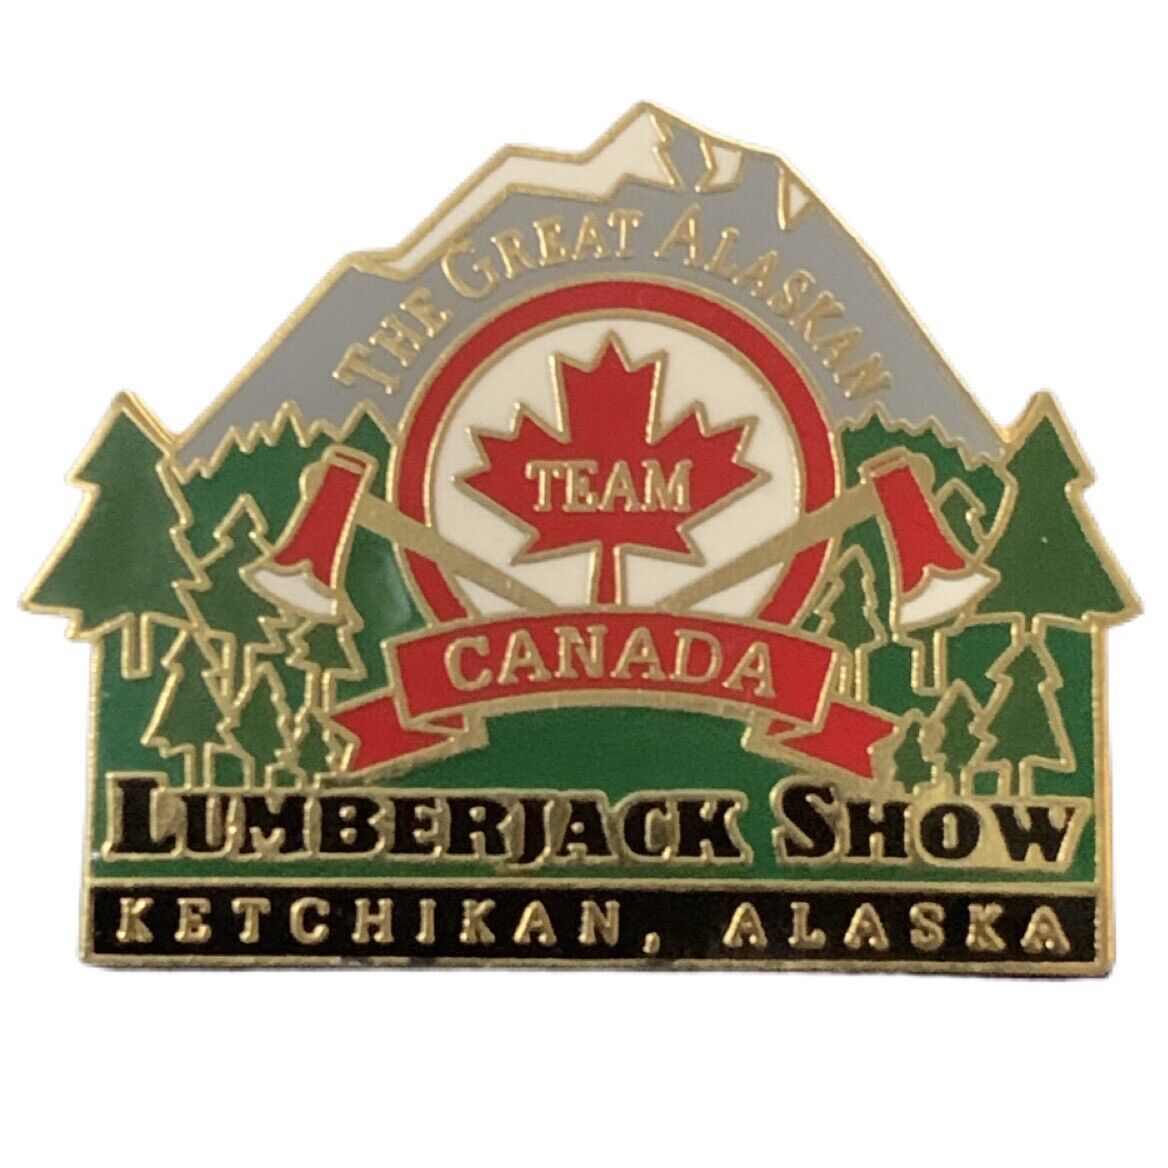 Great Alaskan Lumberjack Show Team Canada Ketchikan Alaska Travel Souvenir Pin